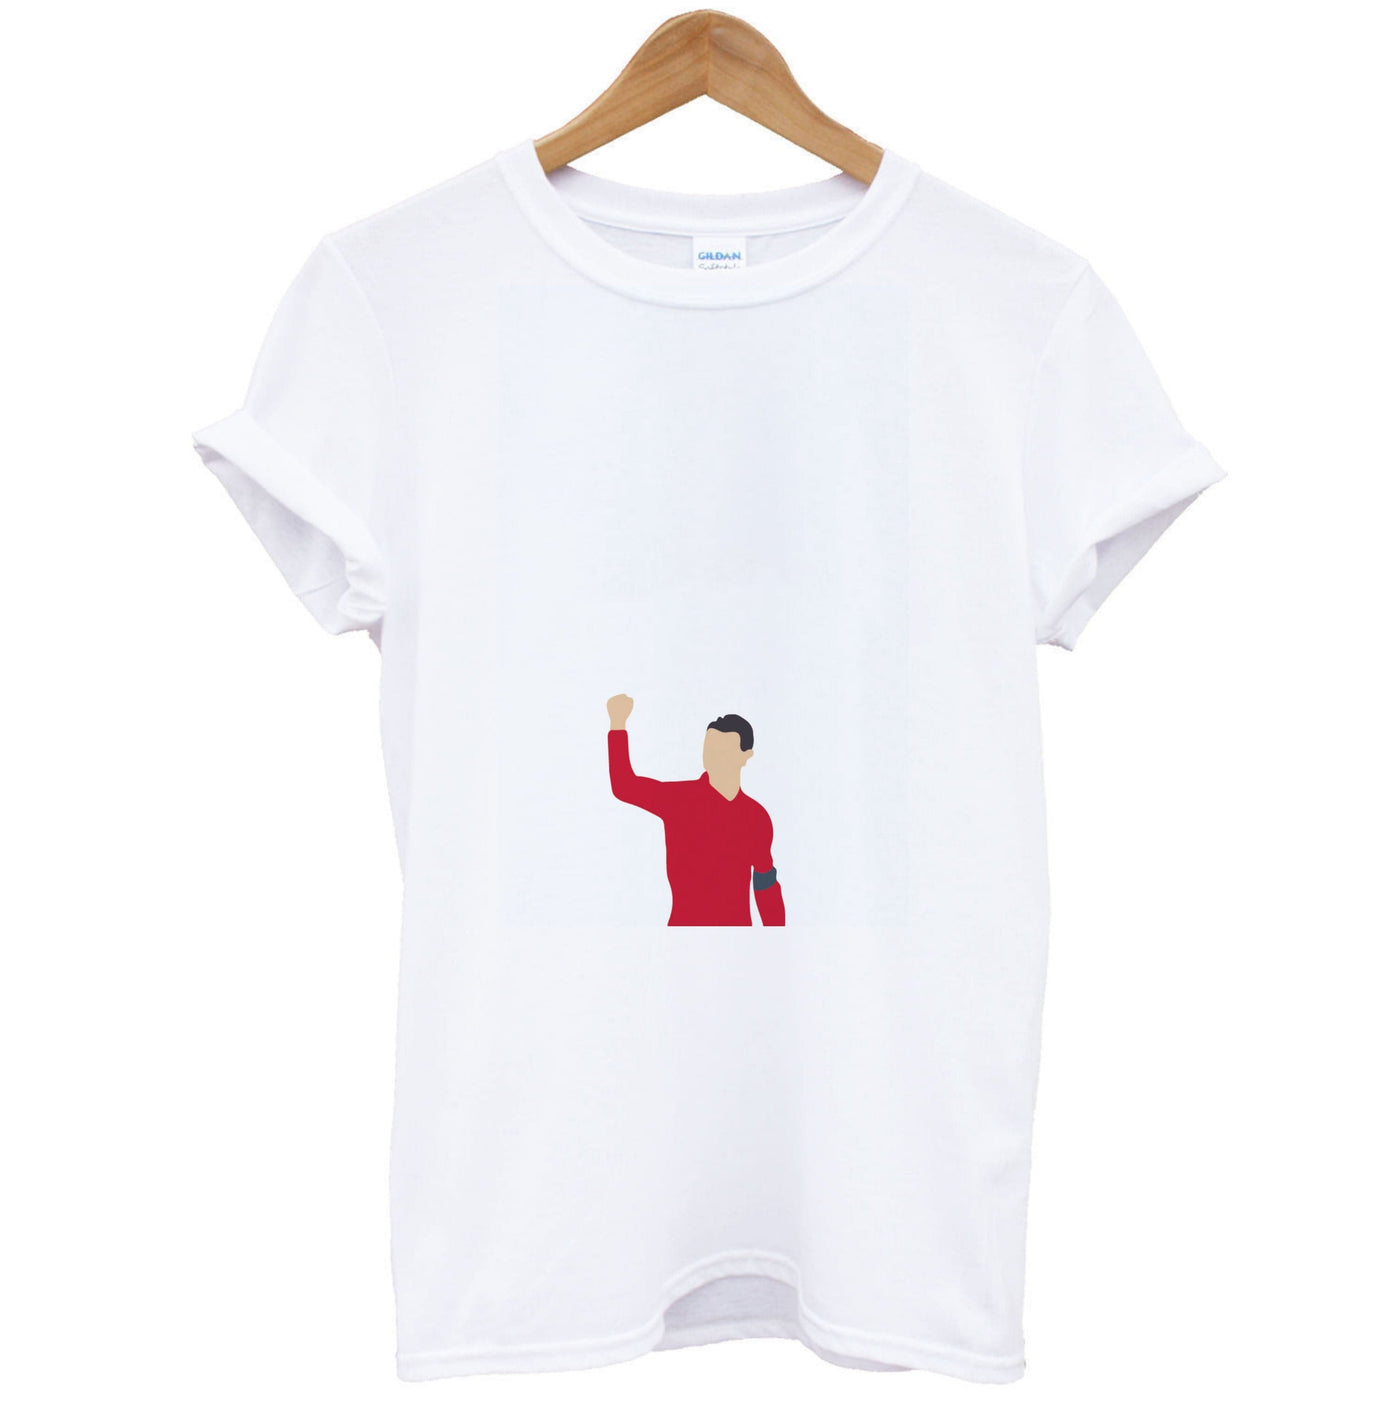 Celebration - Ronaldo T-Shirt